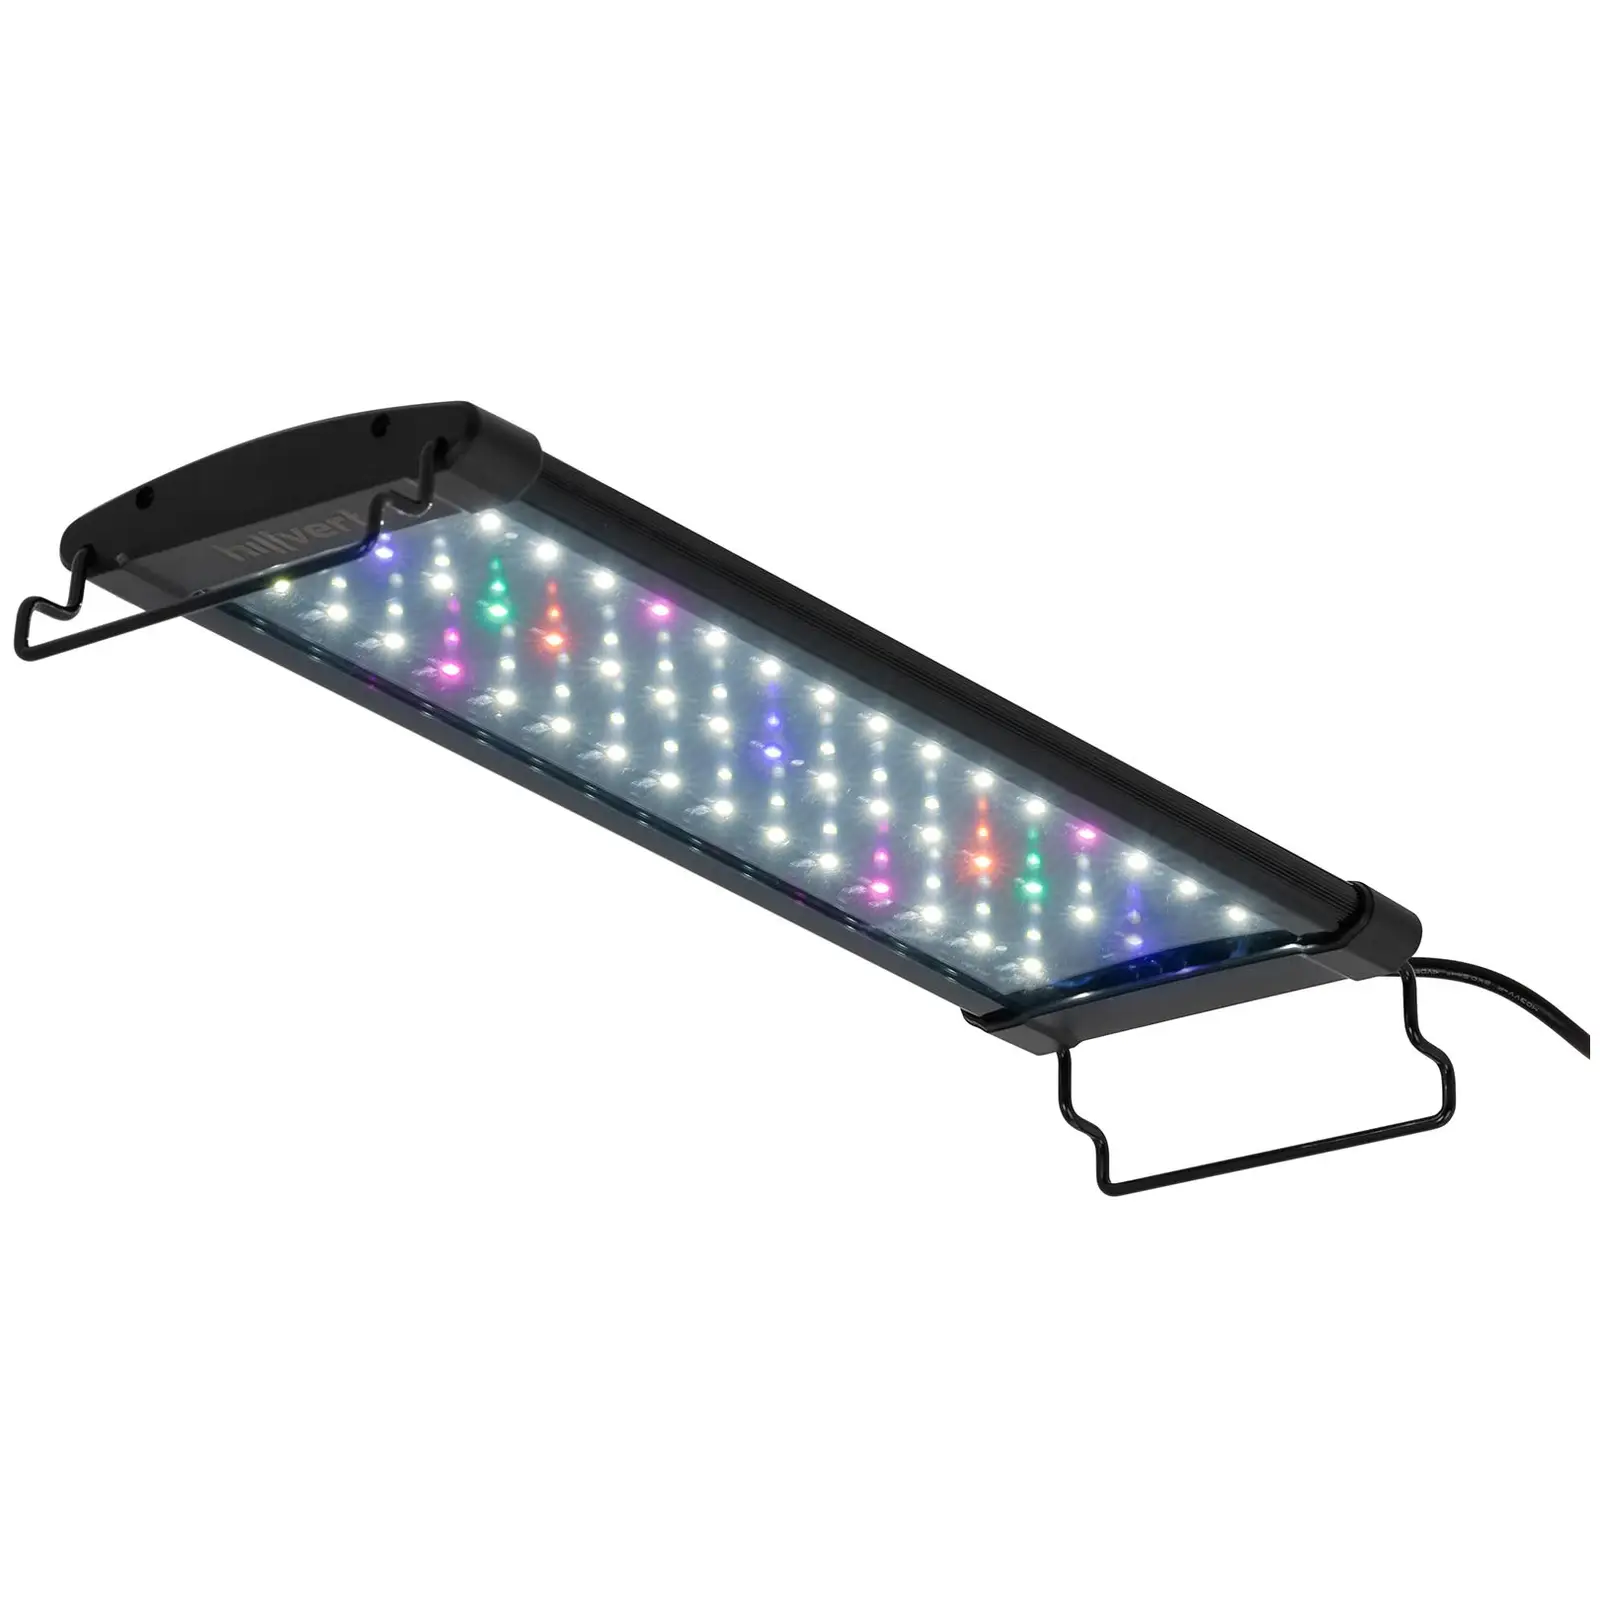 LED-akvaariovalo - 45 LED-valoa - 12 W - 36 cm